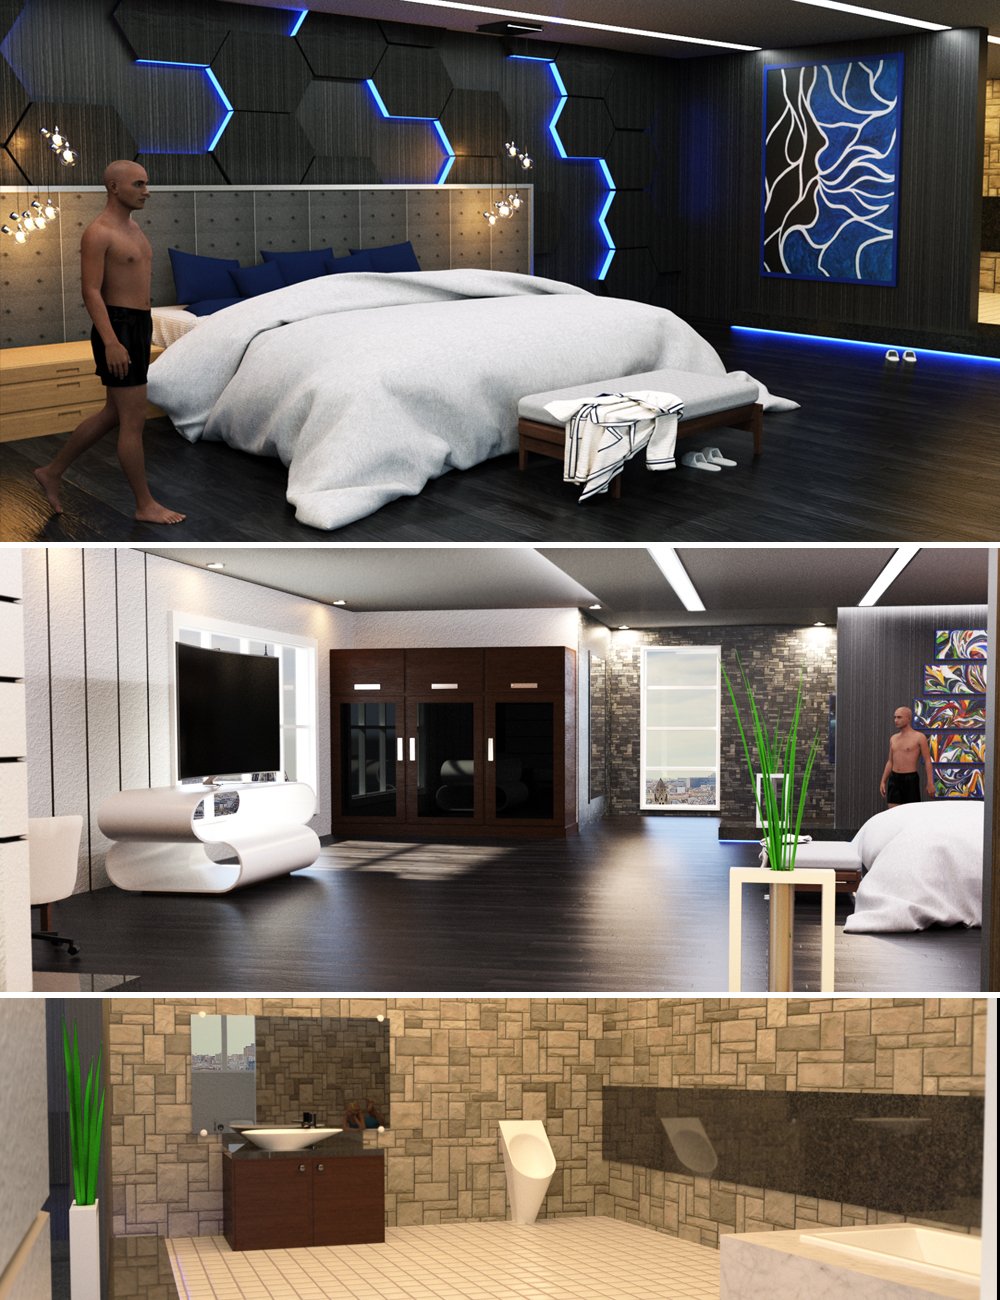 Eurotel Premium Bedroom by: Tesla3dCorp, 3D Models by Daz 3D